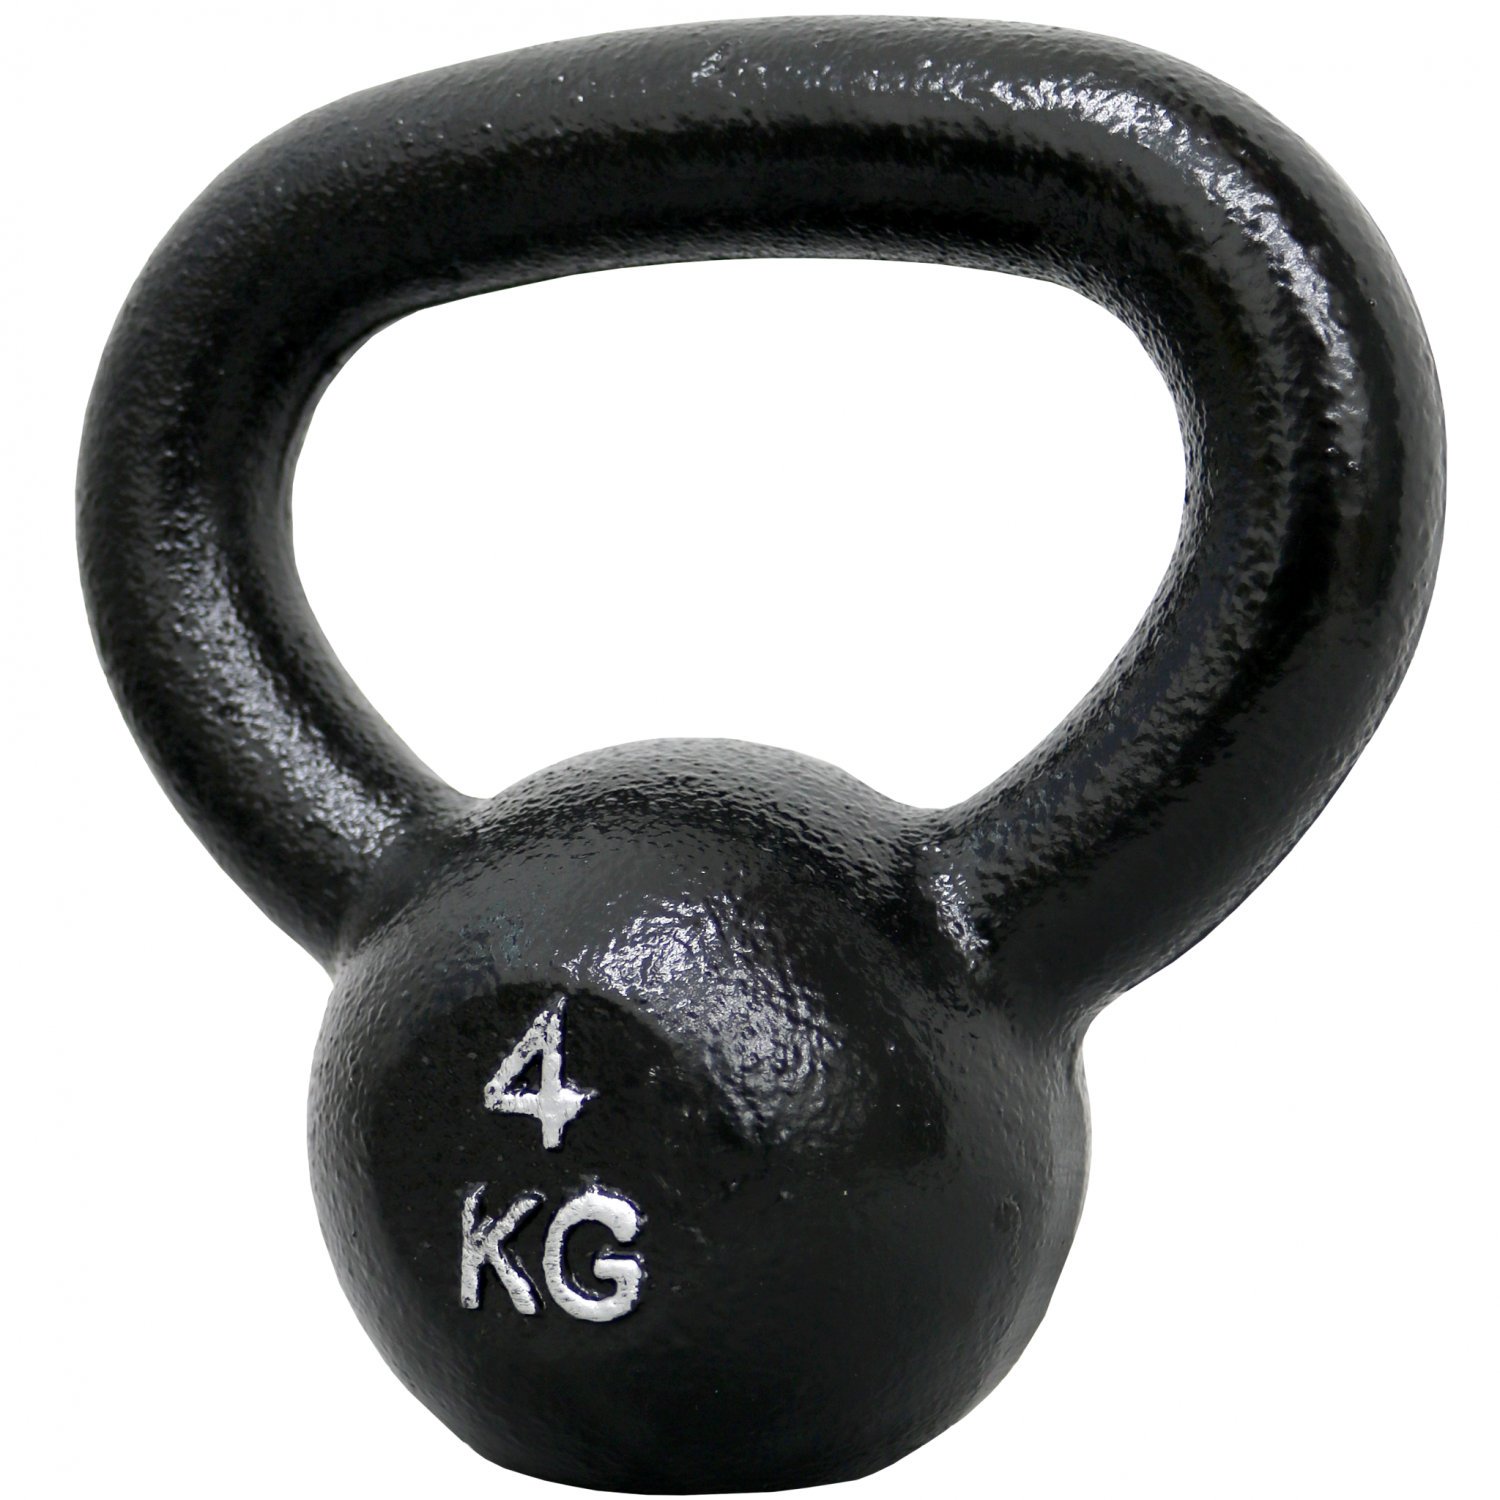 4kg Cast Iron Kettlebell Weight Training Fitness Workout Gym